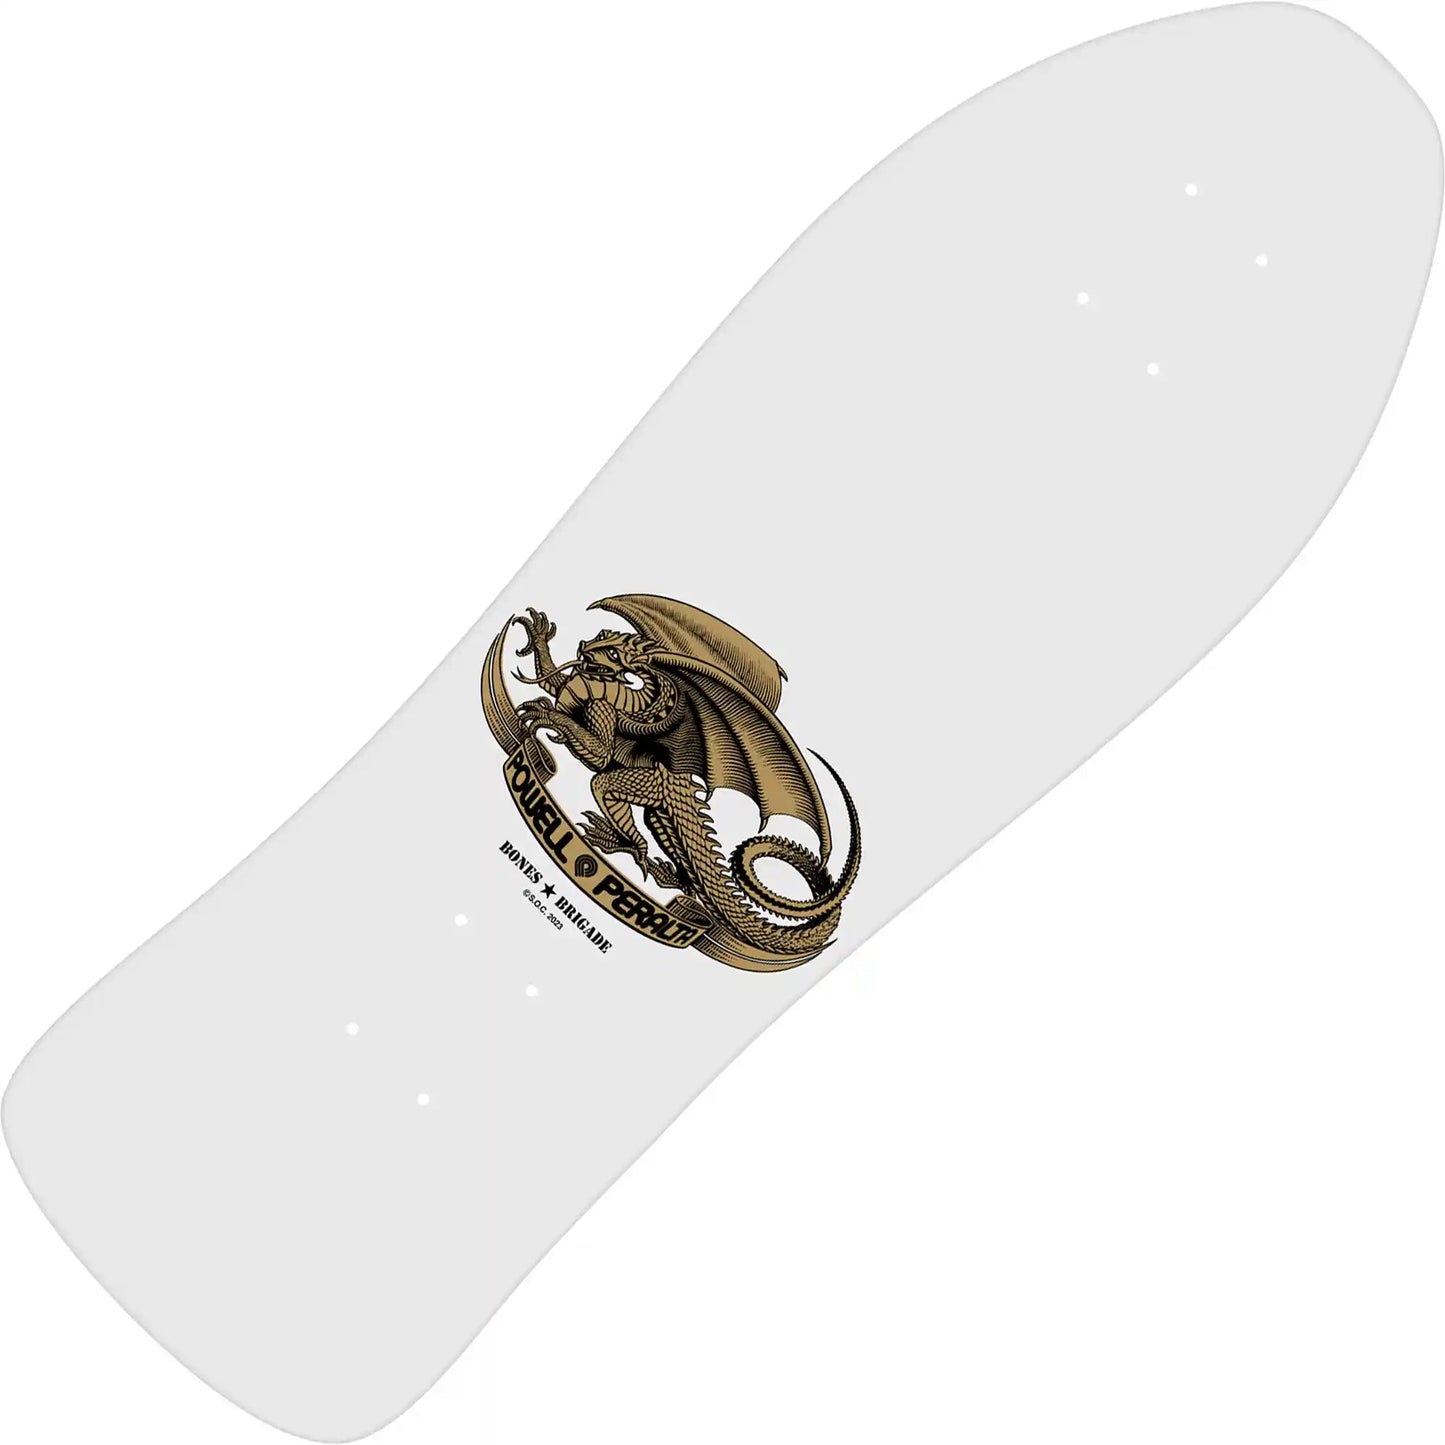 Powell-Peralta Mcgill Series 15 Deck (10"), white - Tiki Room Skateboards - 2